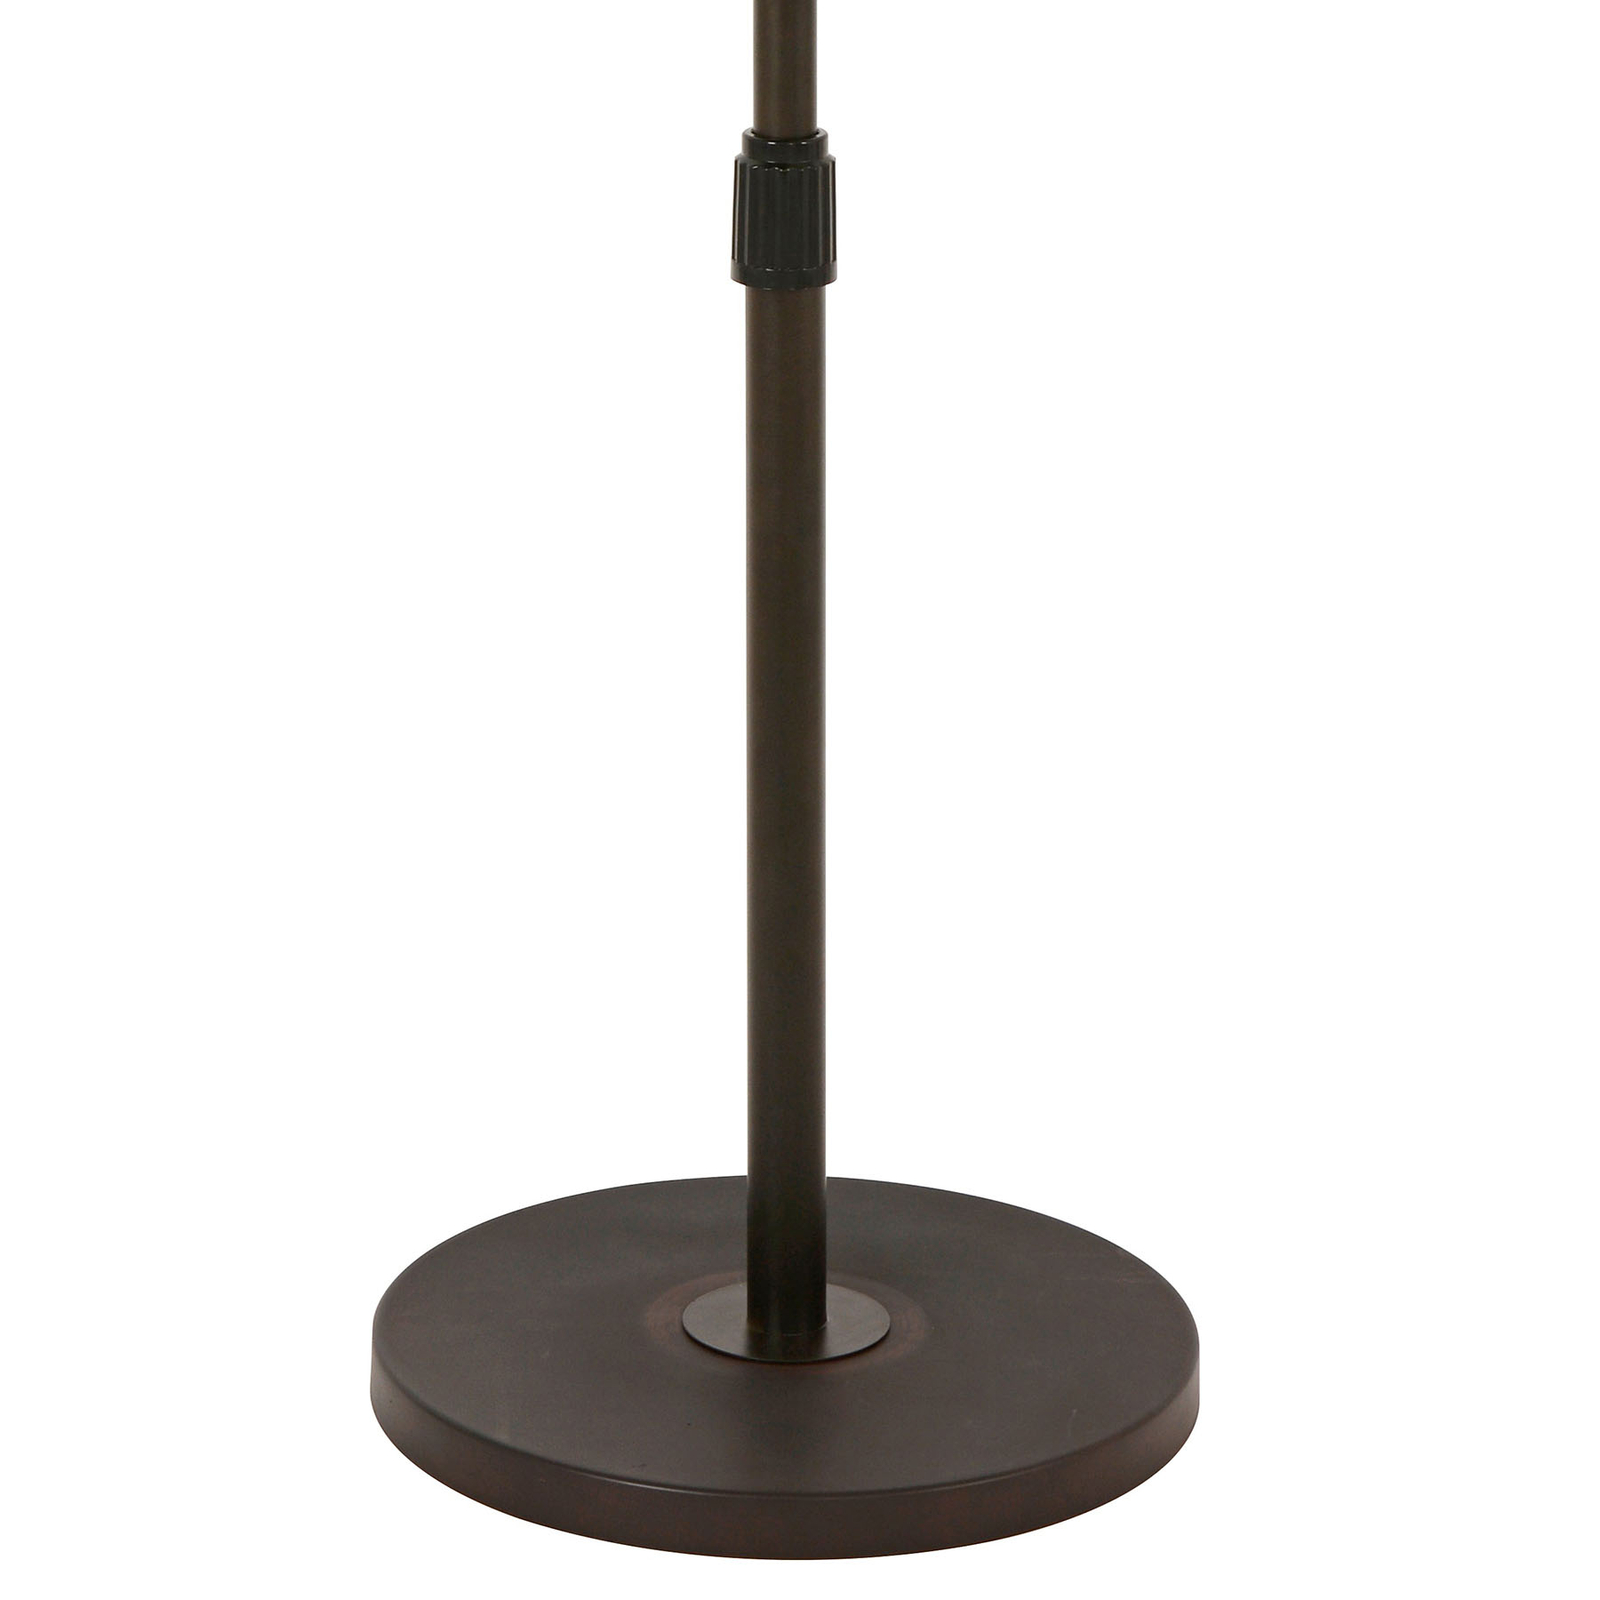 Podstavný ventilátor Beacon Breeze bronzové barvy, kulatá základna, tichý